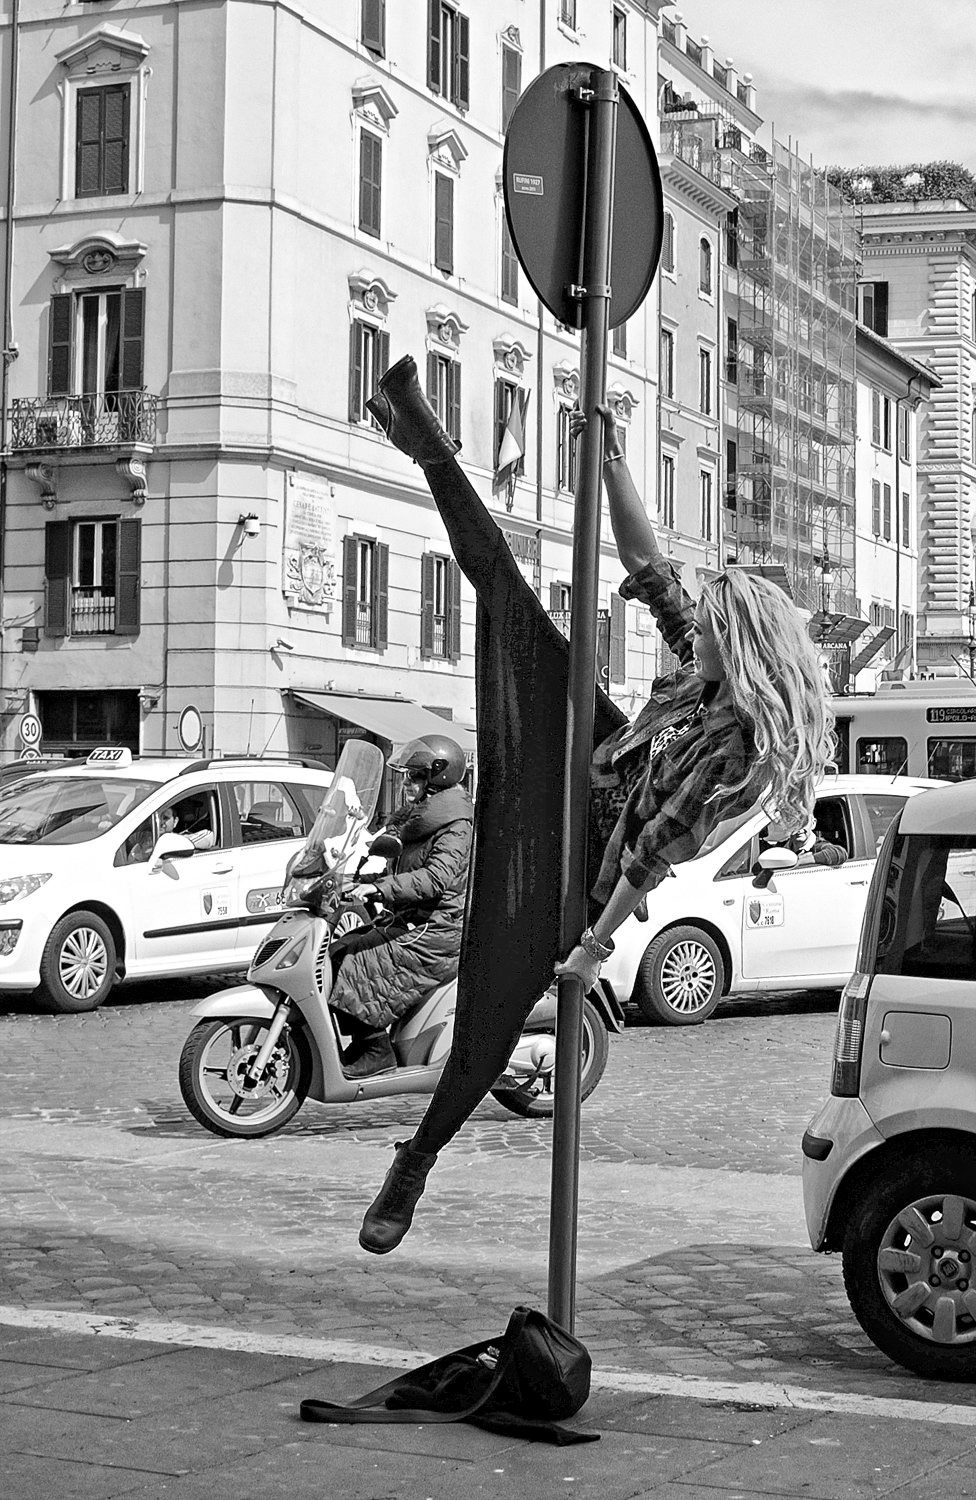 Street pole dance!...